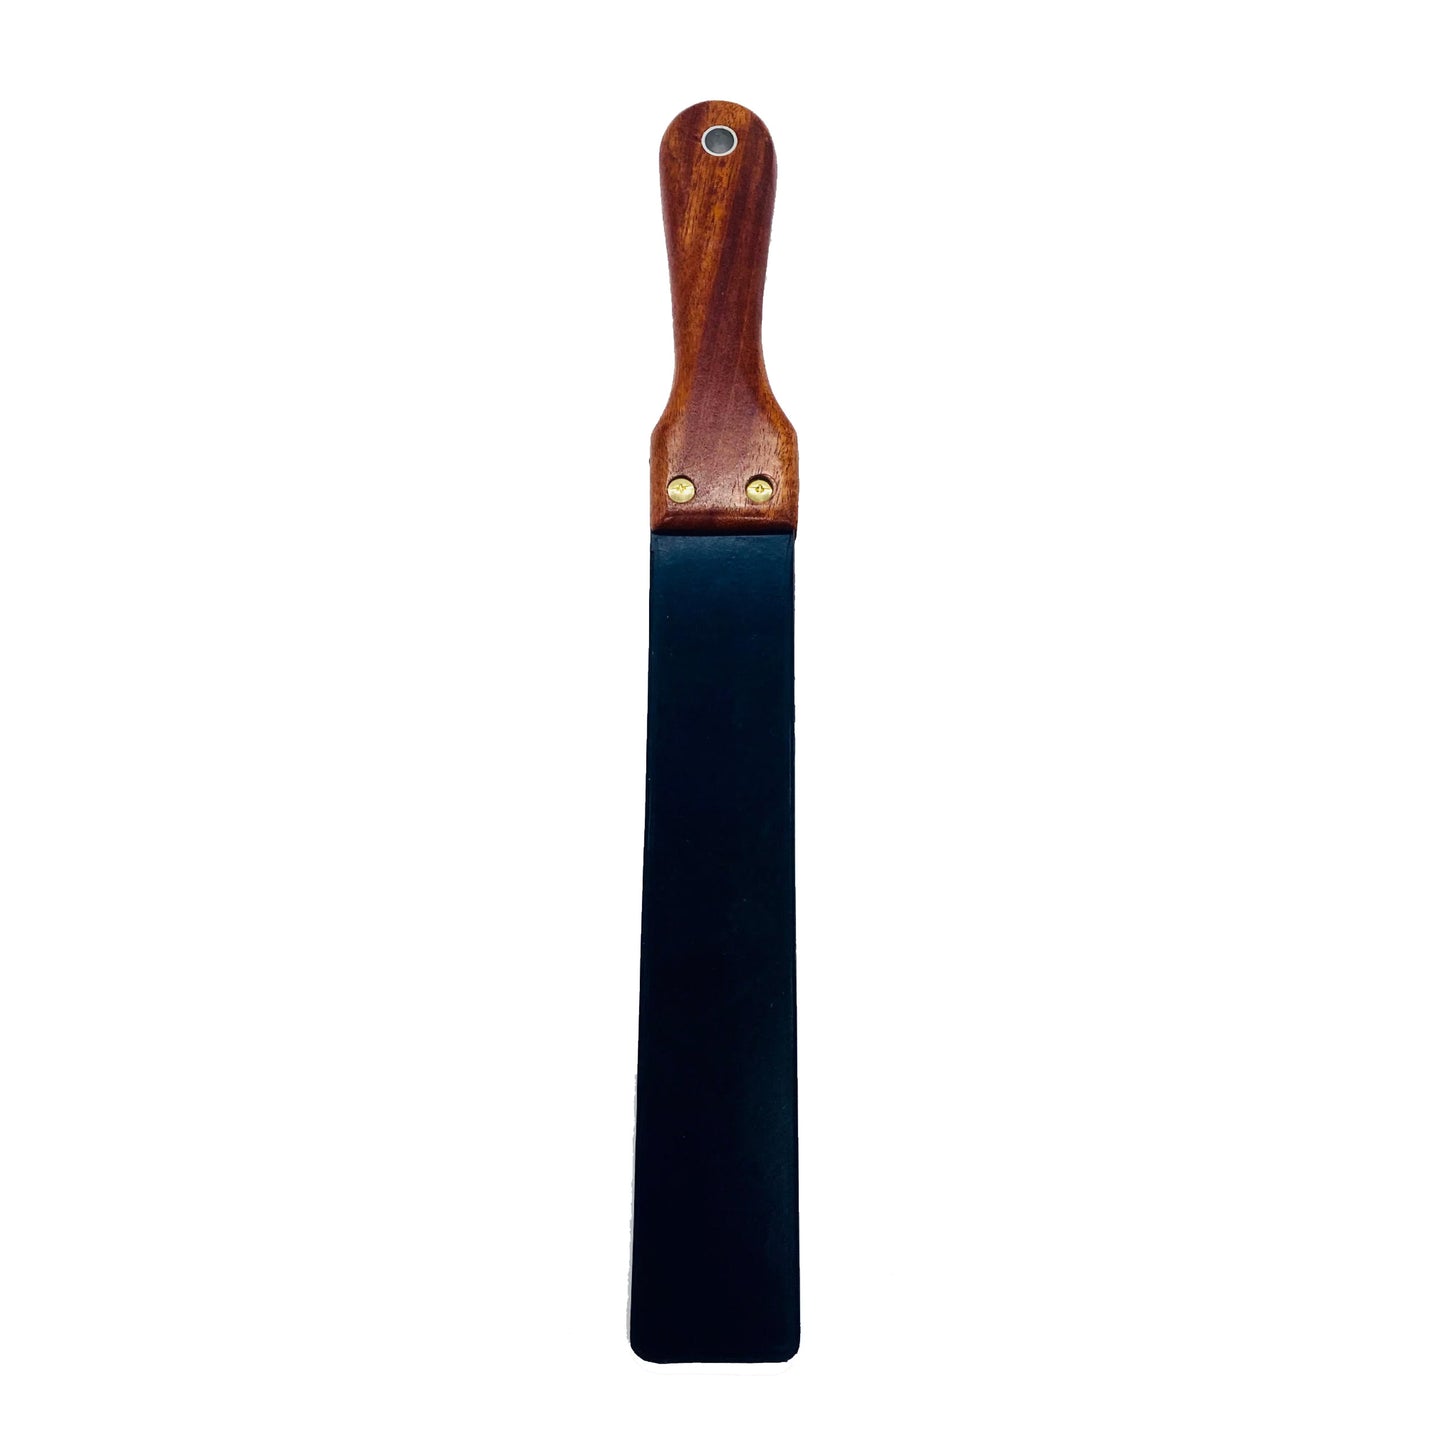 Rubber Barber Strap Spanking Paddle, rubber strap, barber strap, spanking paddle, paddle, strap, bdsm, impact, punishment, discipline